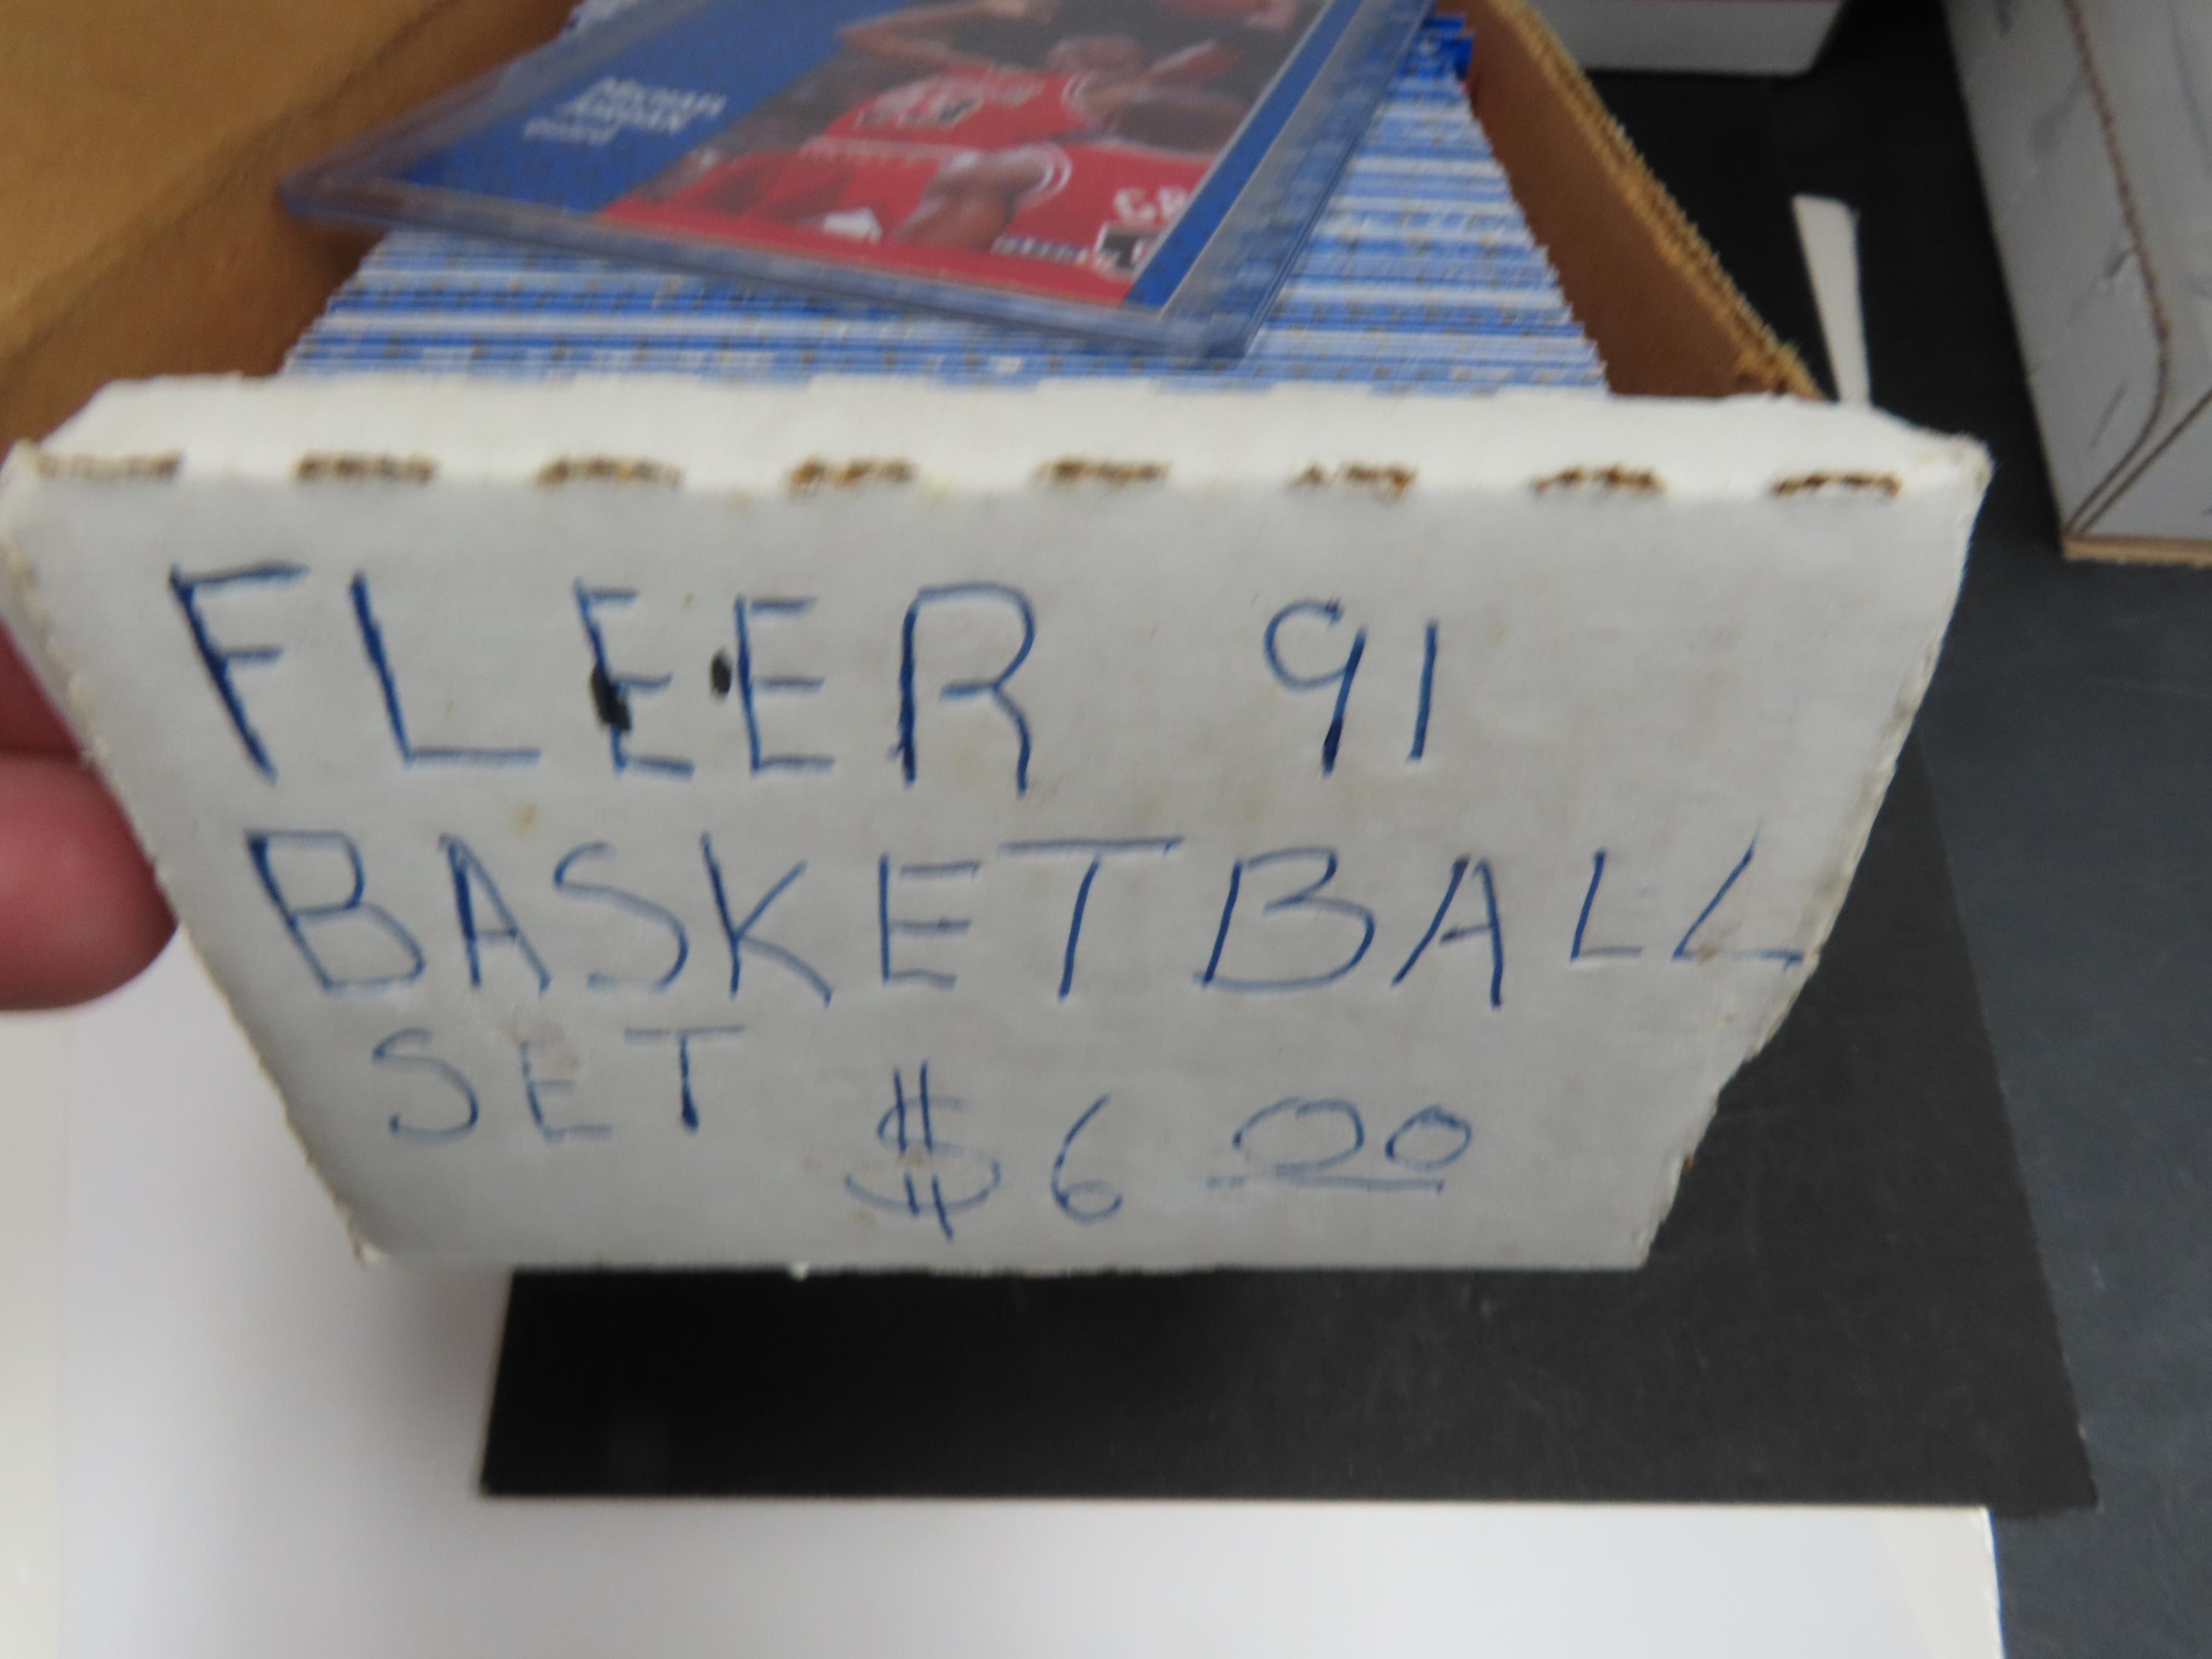 1991-92 FLEER BASKETBALL COMPLETE SERIES 1 SET #1-239 (missing checklist #240)